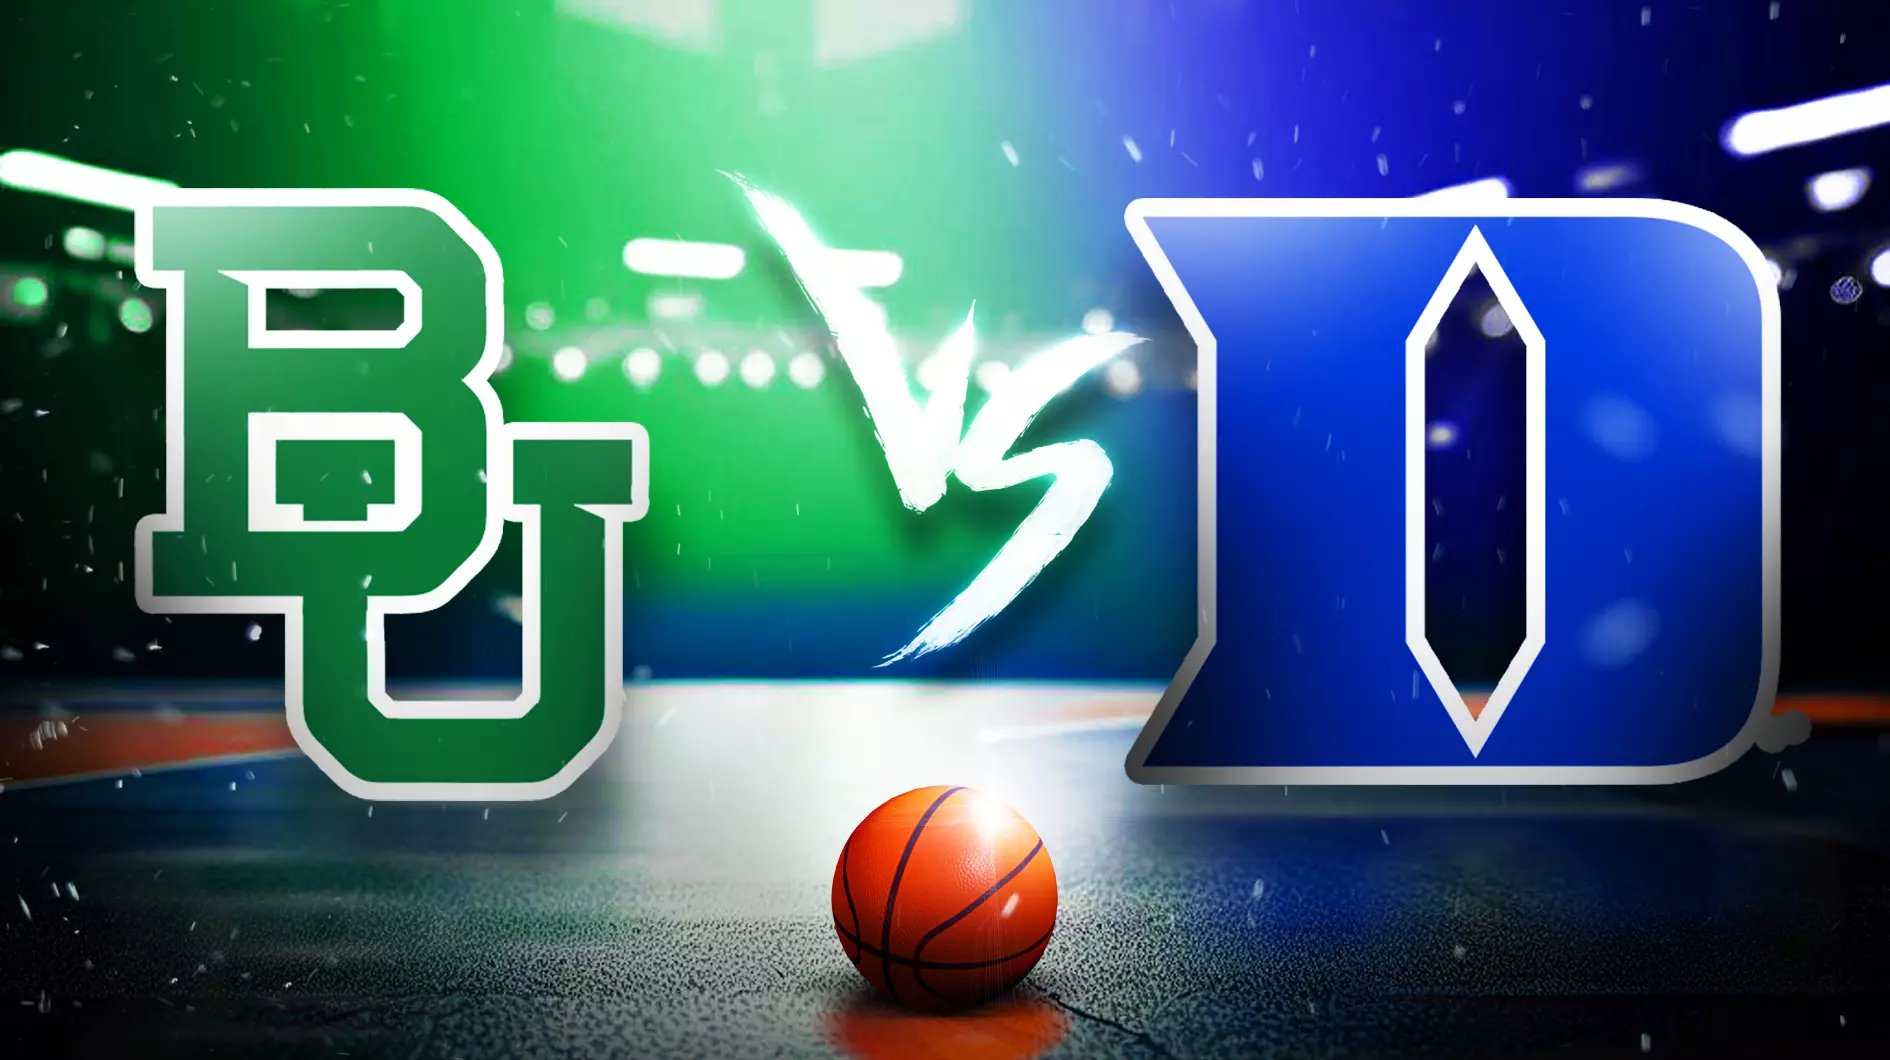 Baylor vs. Duke prediction, odds, pick for Men's College Basketball